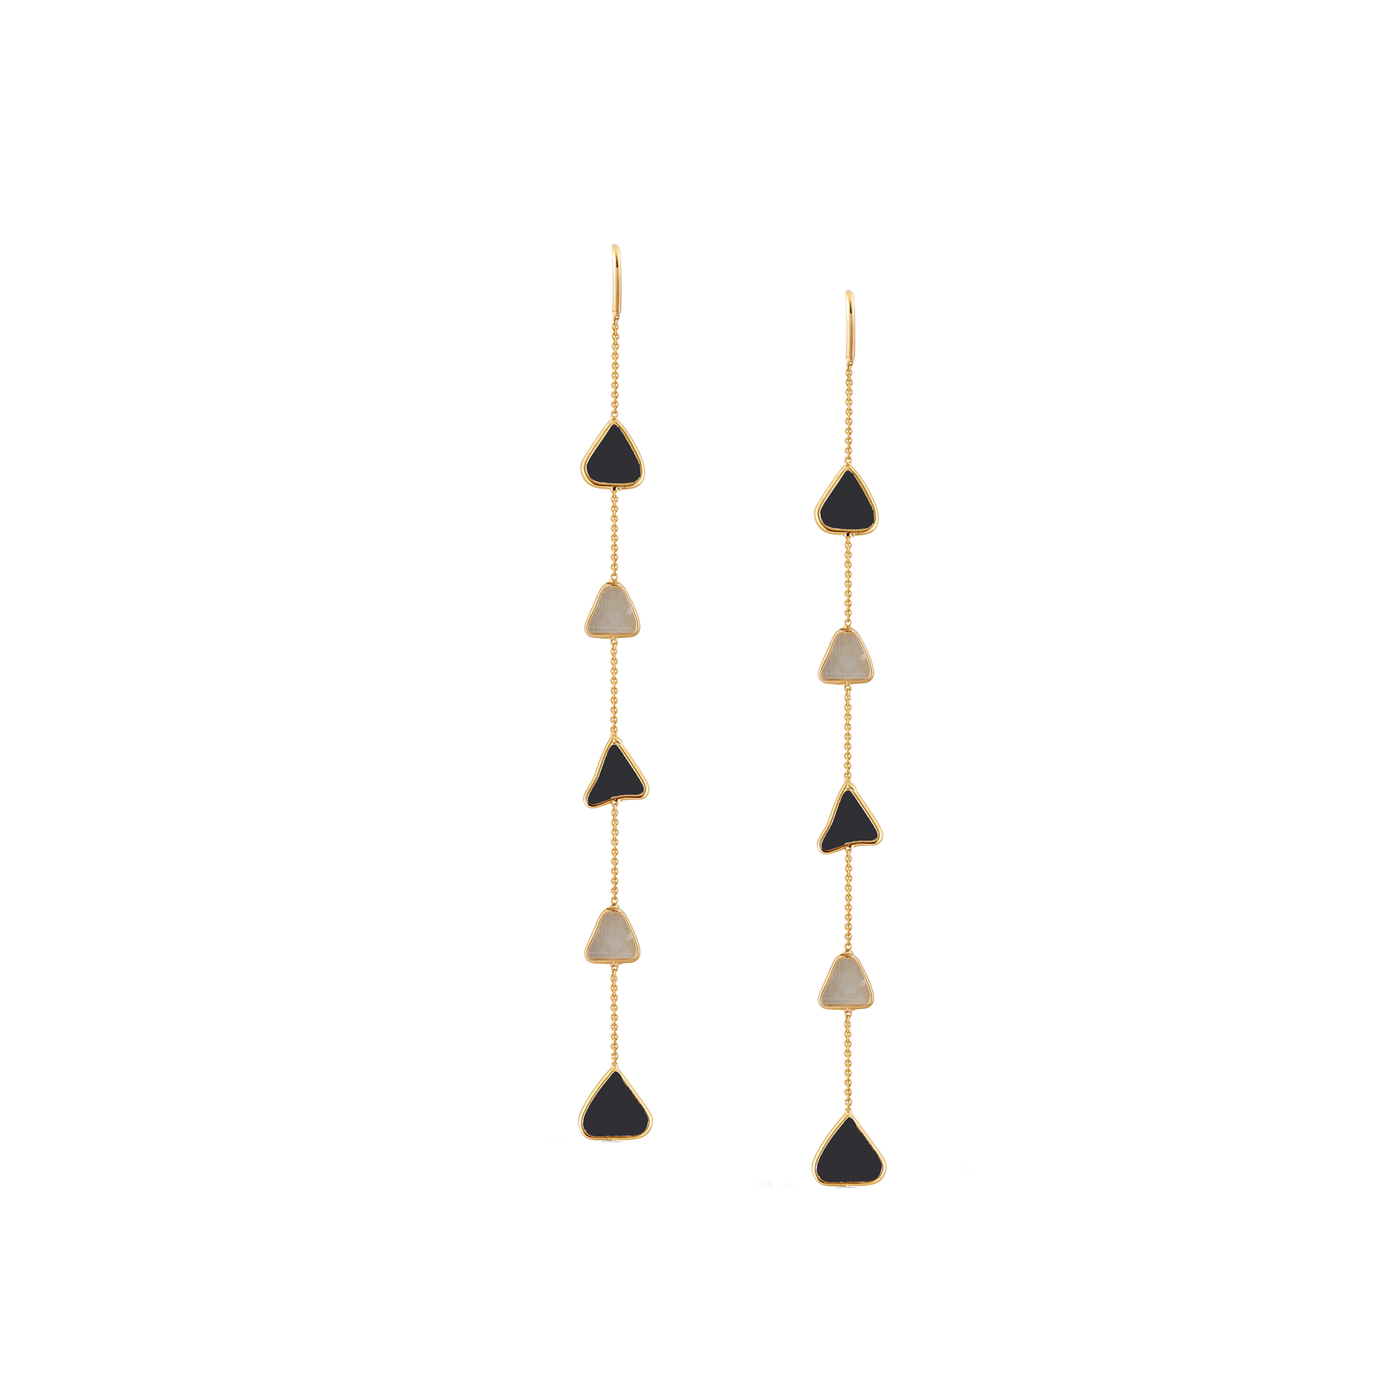 Organic Black And White Diamond Slice Earrings In 18K Yellow Gold